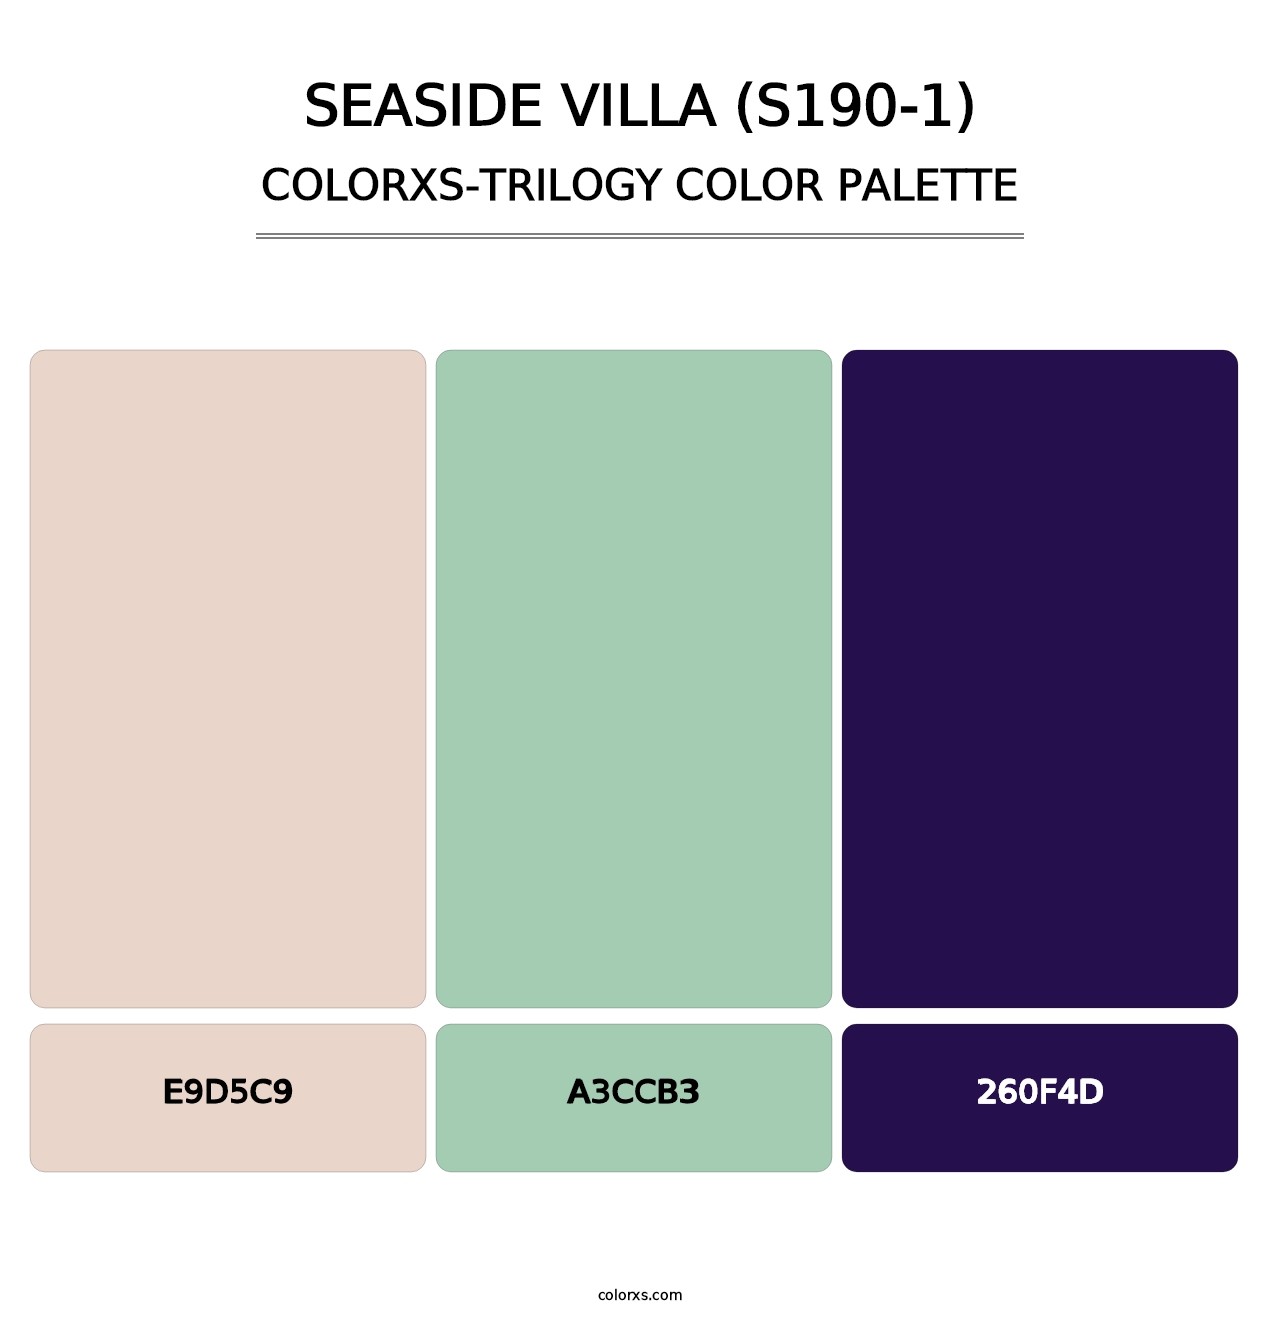 Seaside Villa (S190-1) - Colorxs Trilogy Palette